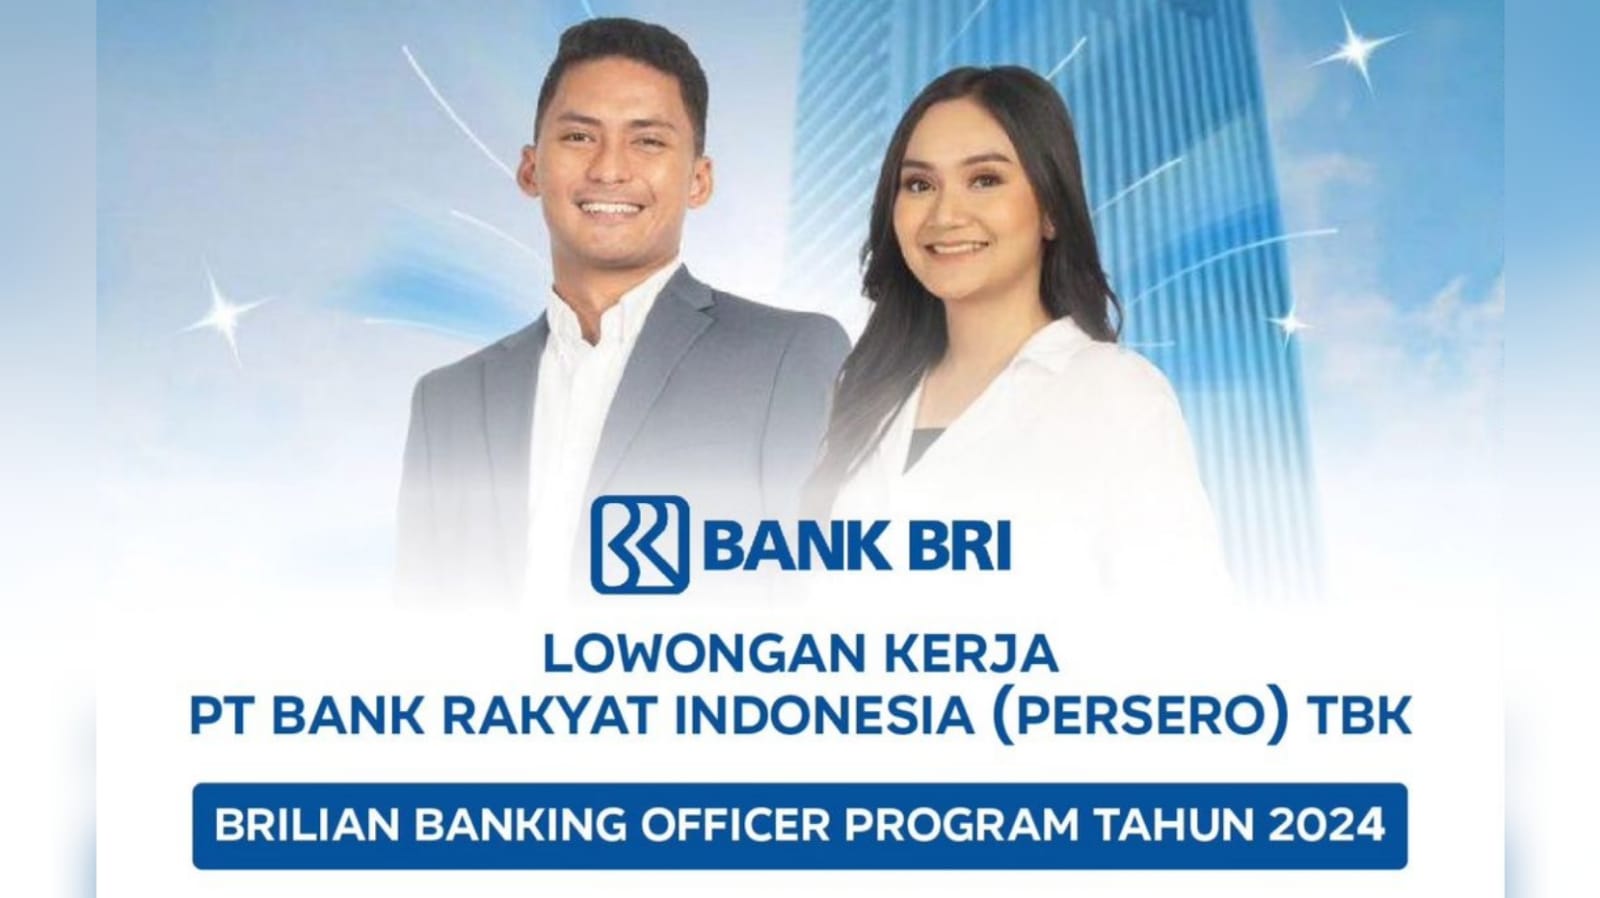 Loker BUMN: PT Bank Rakyat Indonesia (Persero) Membuka Lowongan Kerja Untuk Penempatan Area Bandung